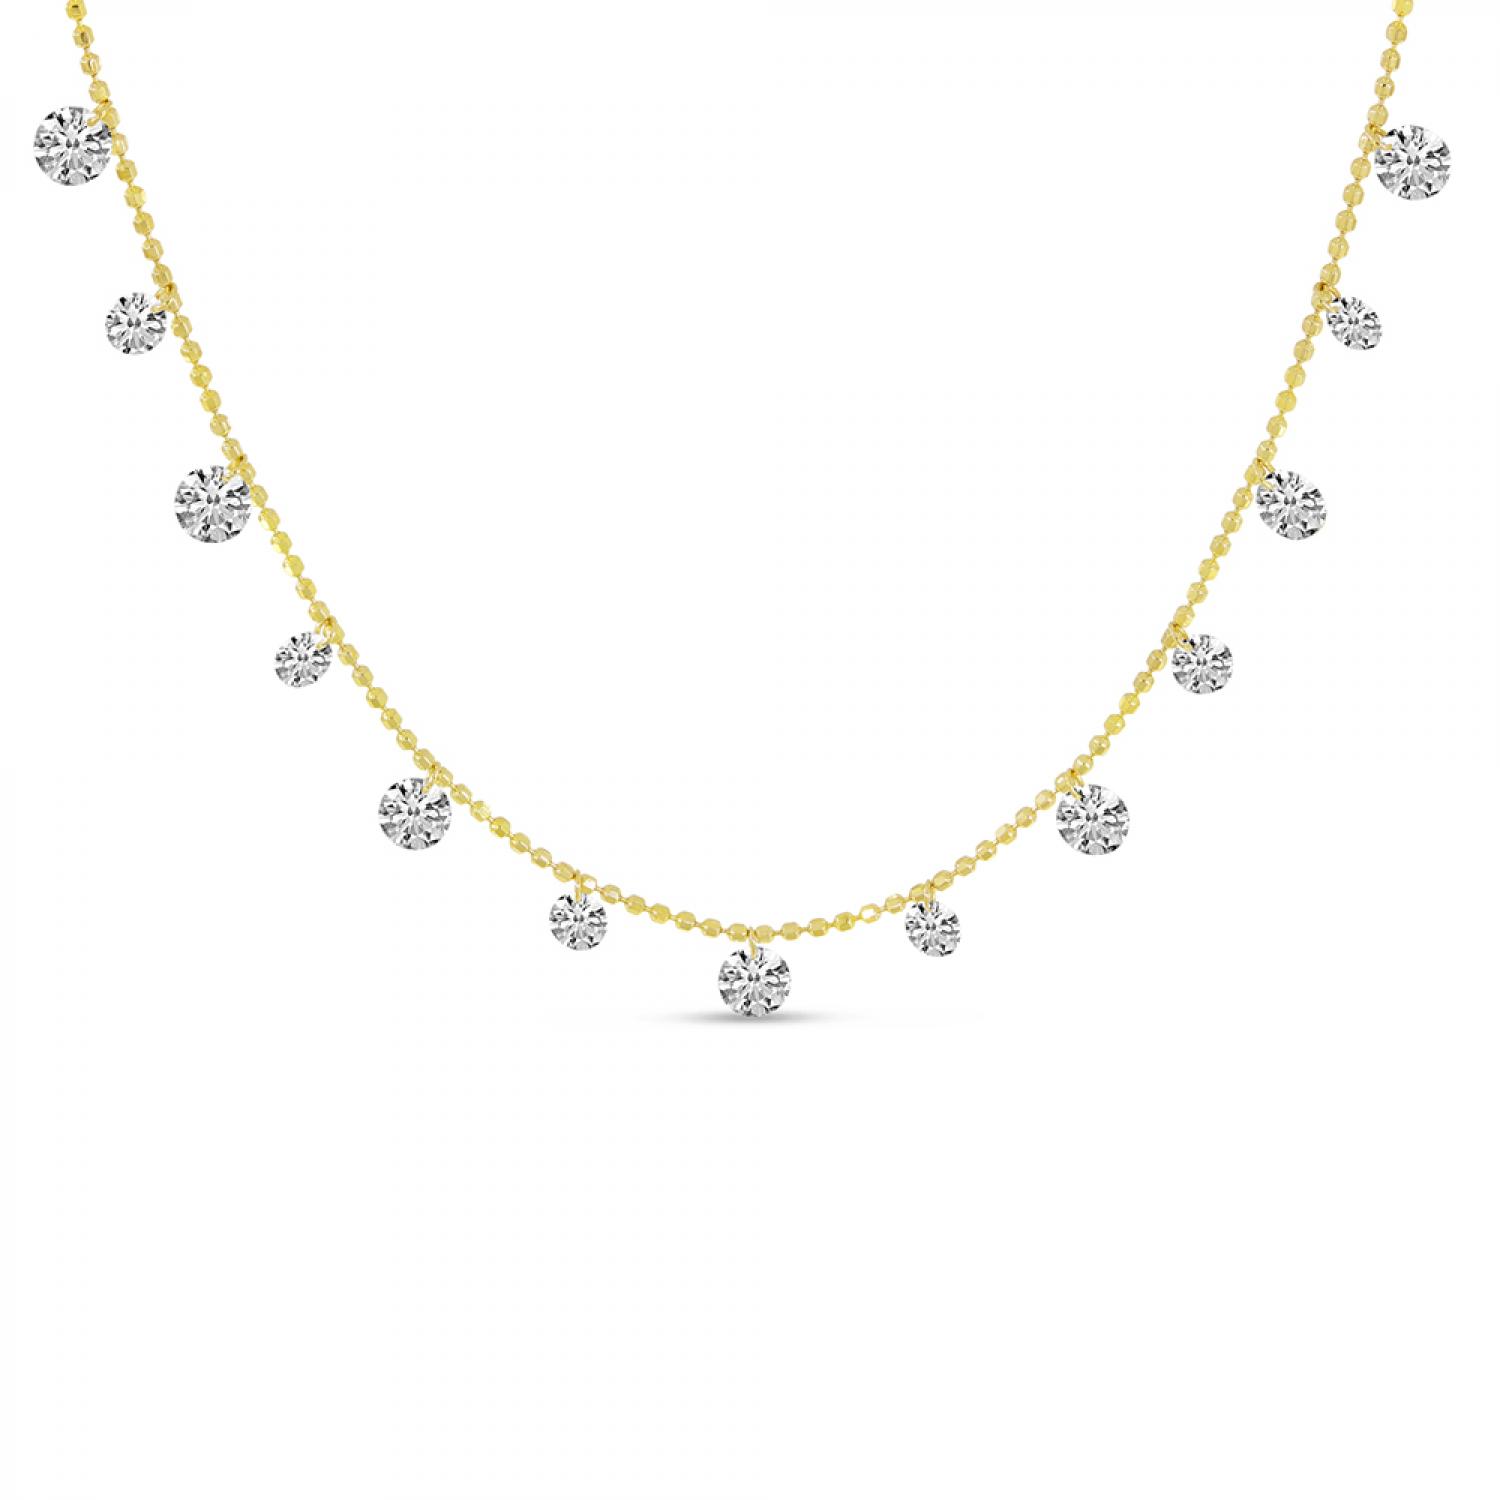 14K Yellow Gold 1.53 Ct Dashing Diamond Bead Chain 18 inch Necklace